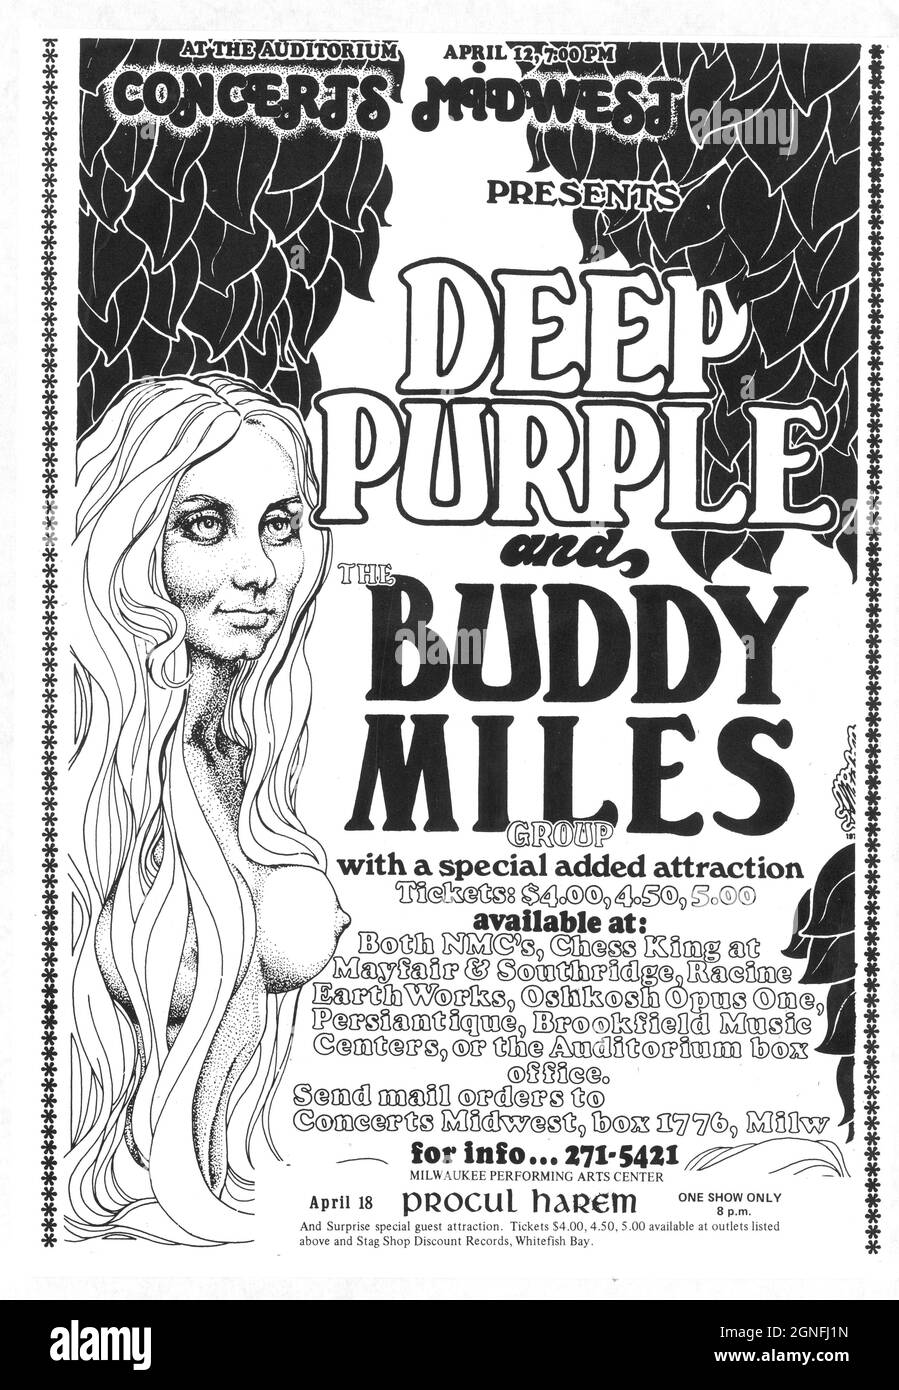 Deep Purple and Buddy Miles, Milwaukee Arts Centre, April 12. 1972 newspaper advert. Stock Photo